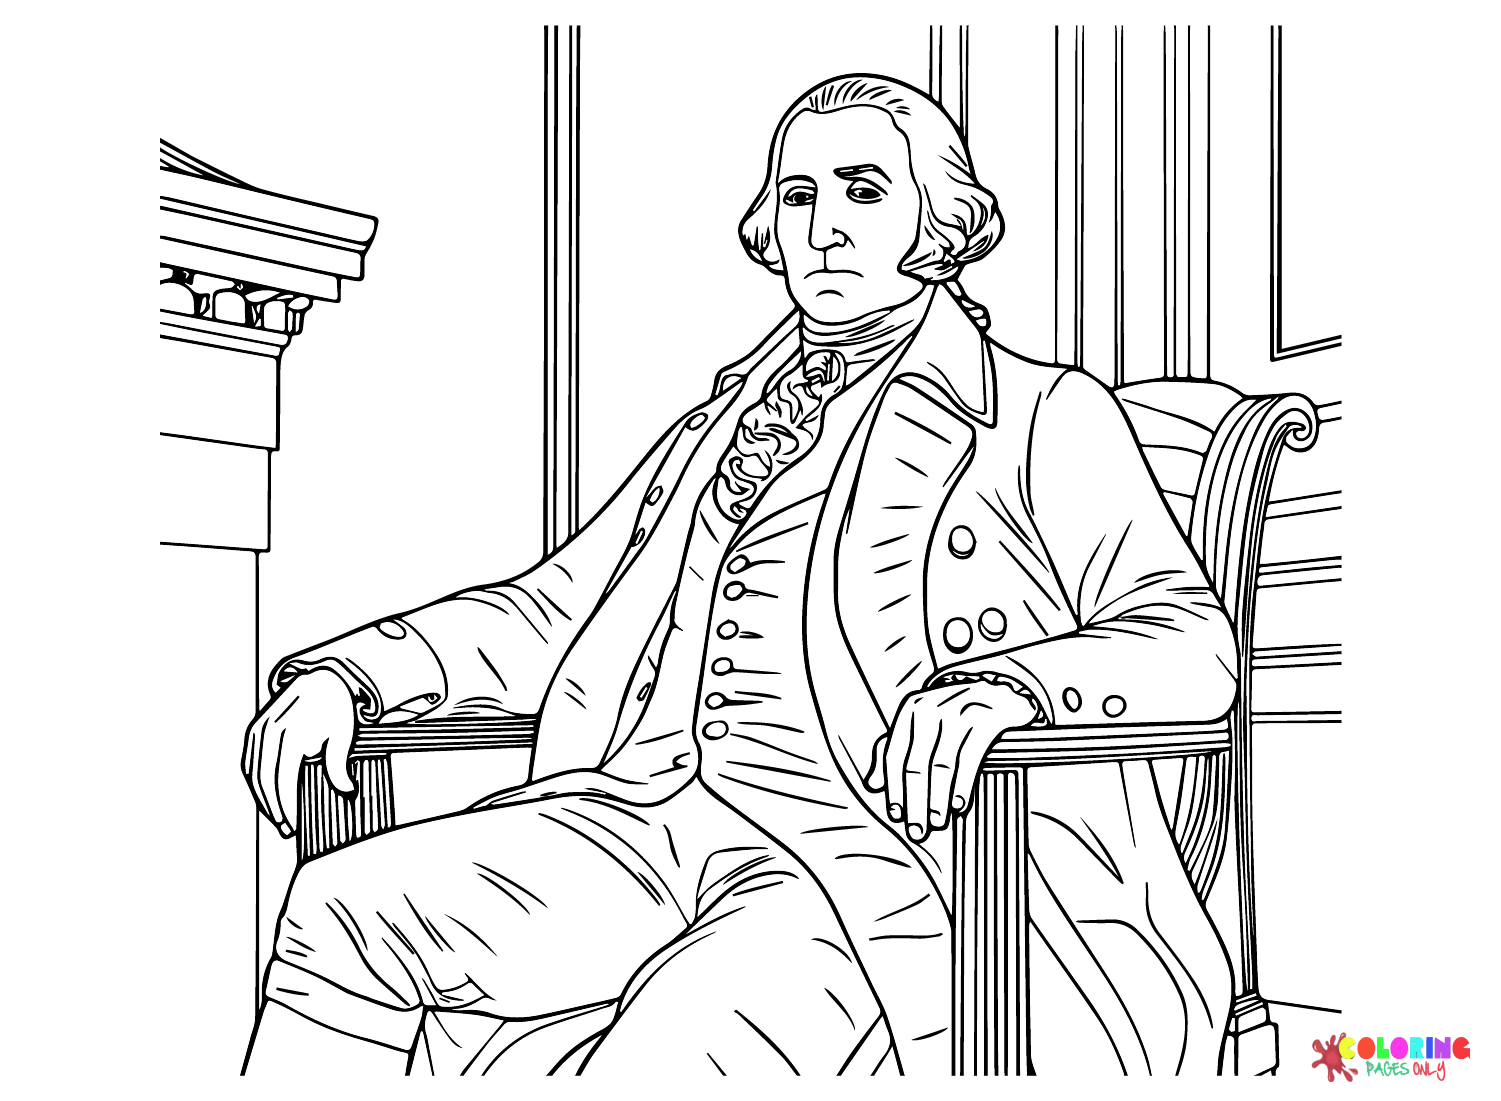 George Washington Dibujo de George Washington